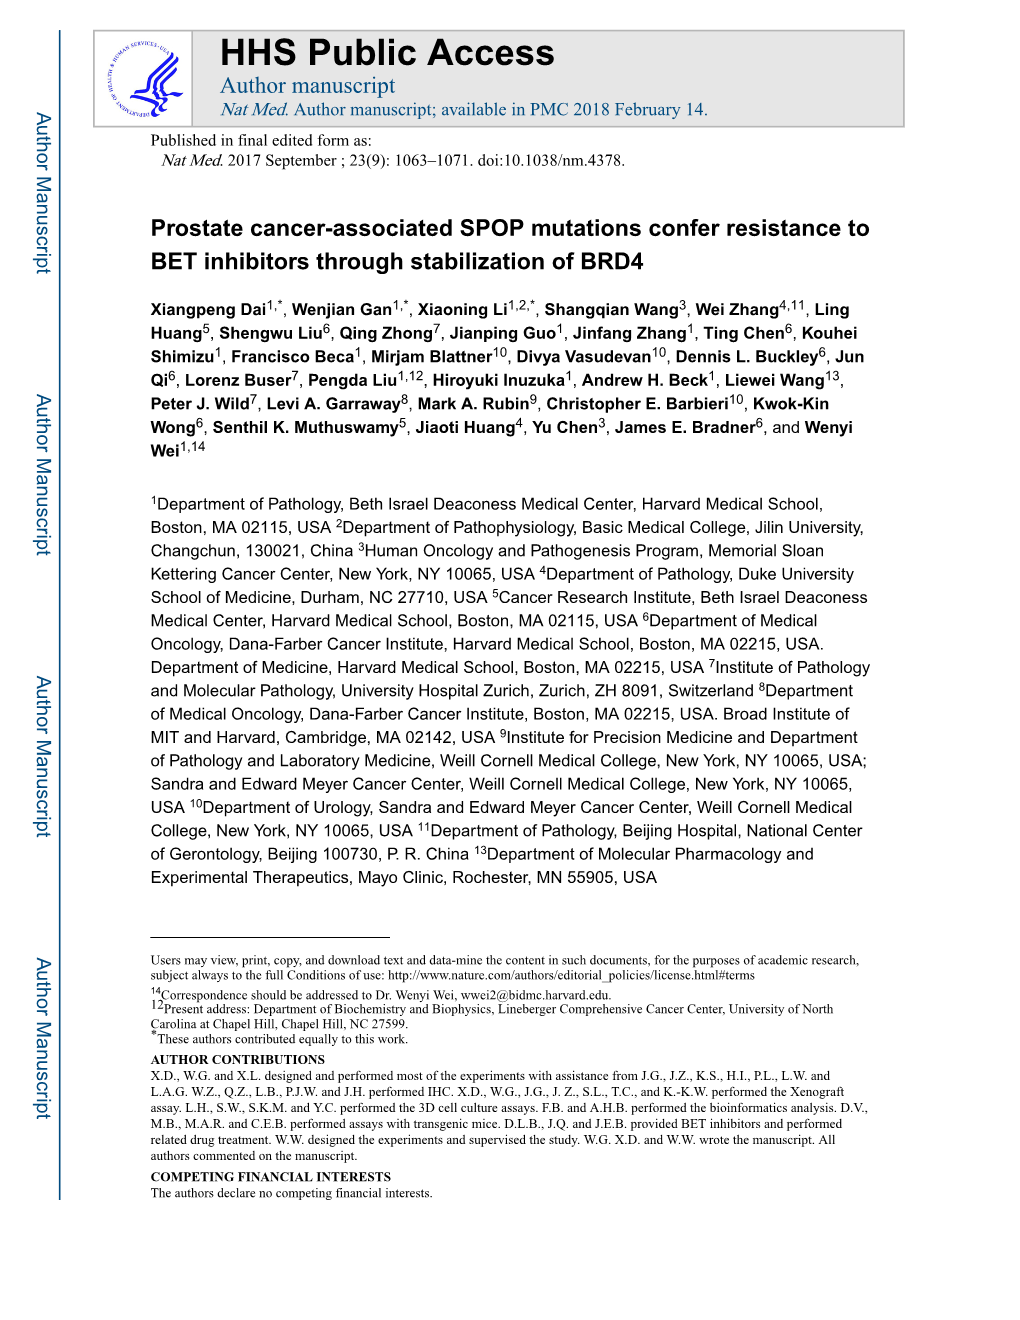 Prostate Cancer-Associated SPOP Mutations Confer Resistance to BET Inhibitors Through Stabilization of BRD4